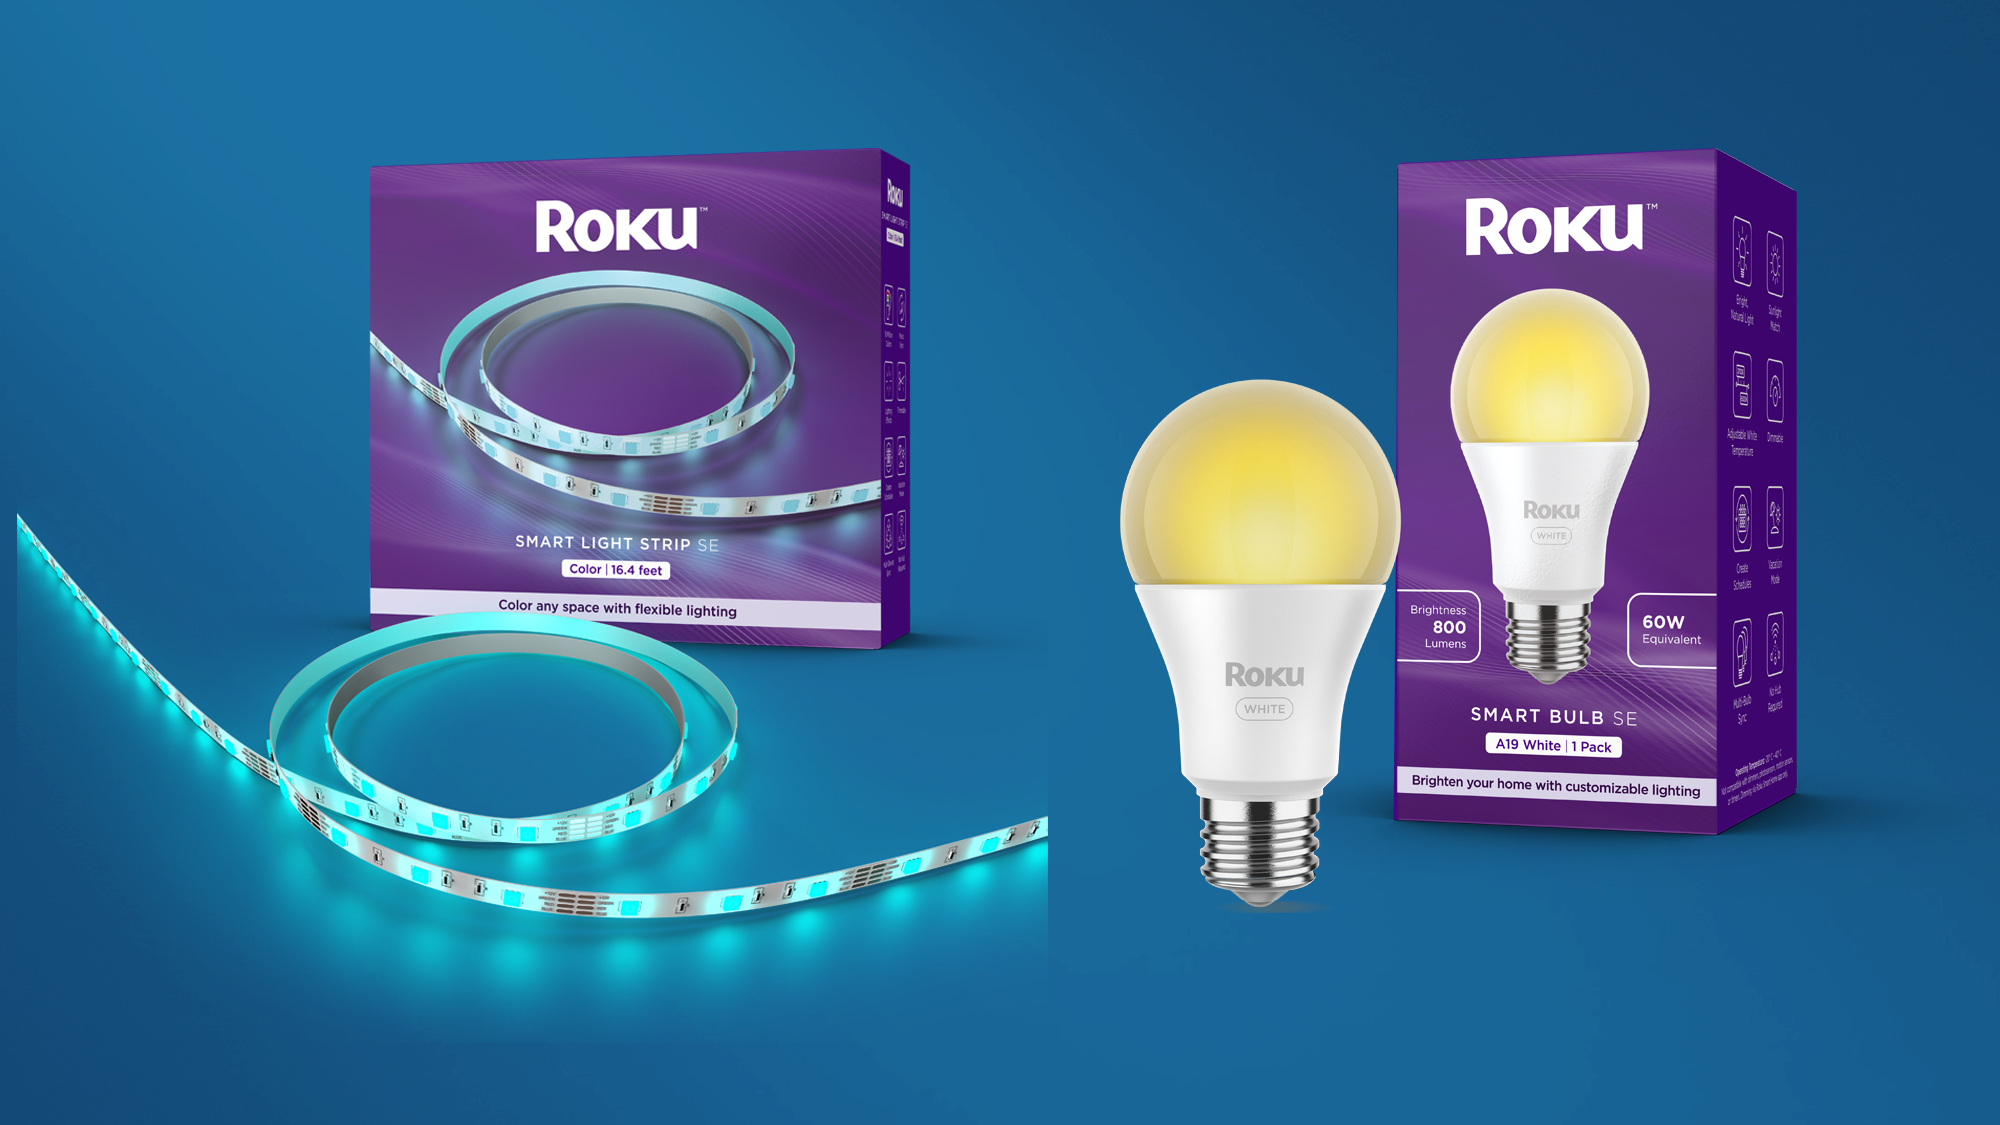 Roku smart lights